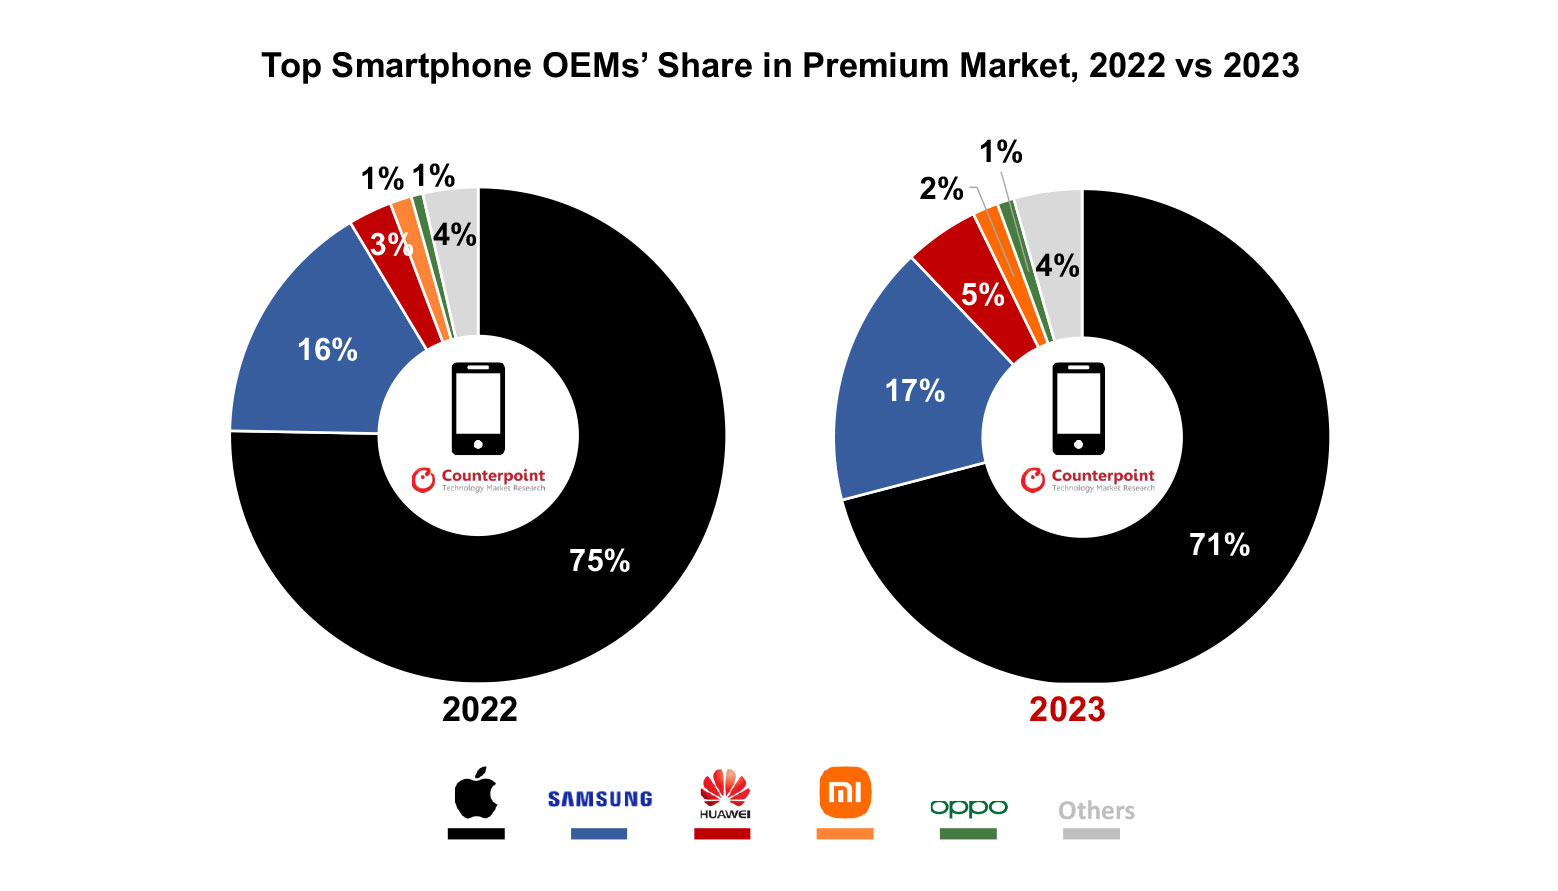 Top Smartphone OEMs Share in Premium Market 2022 vs 2023